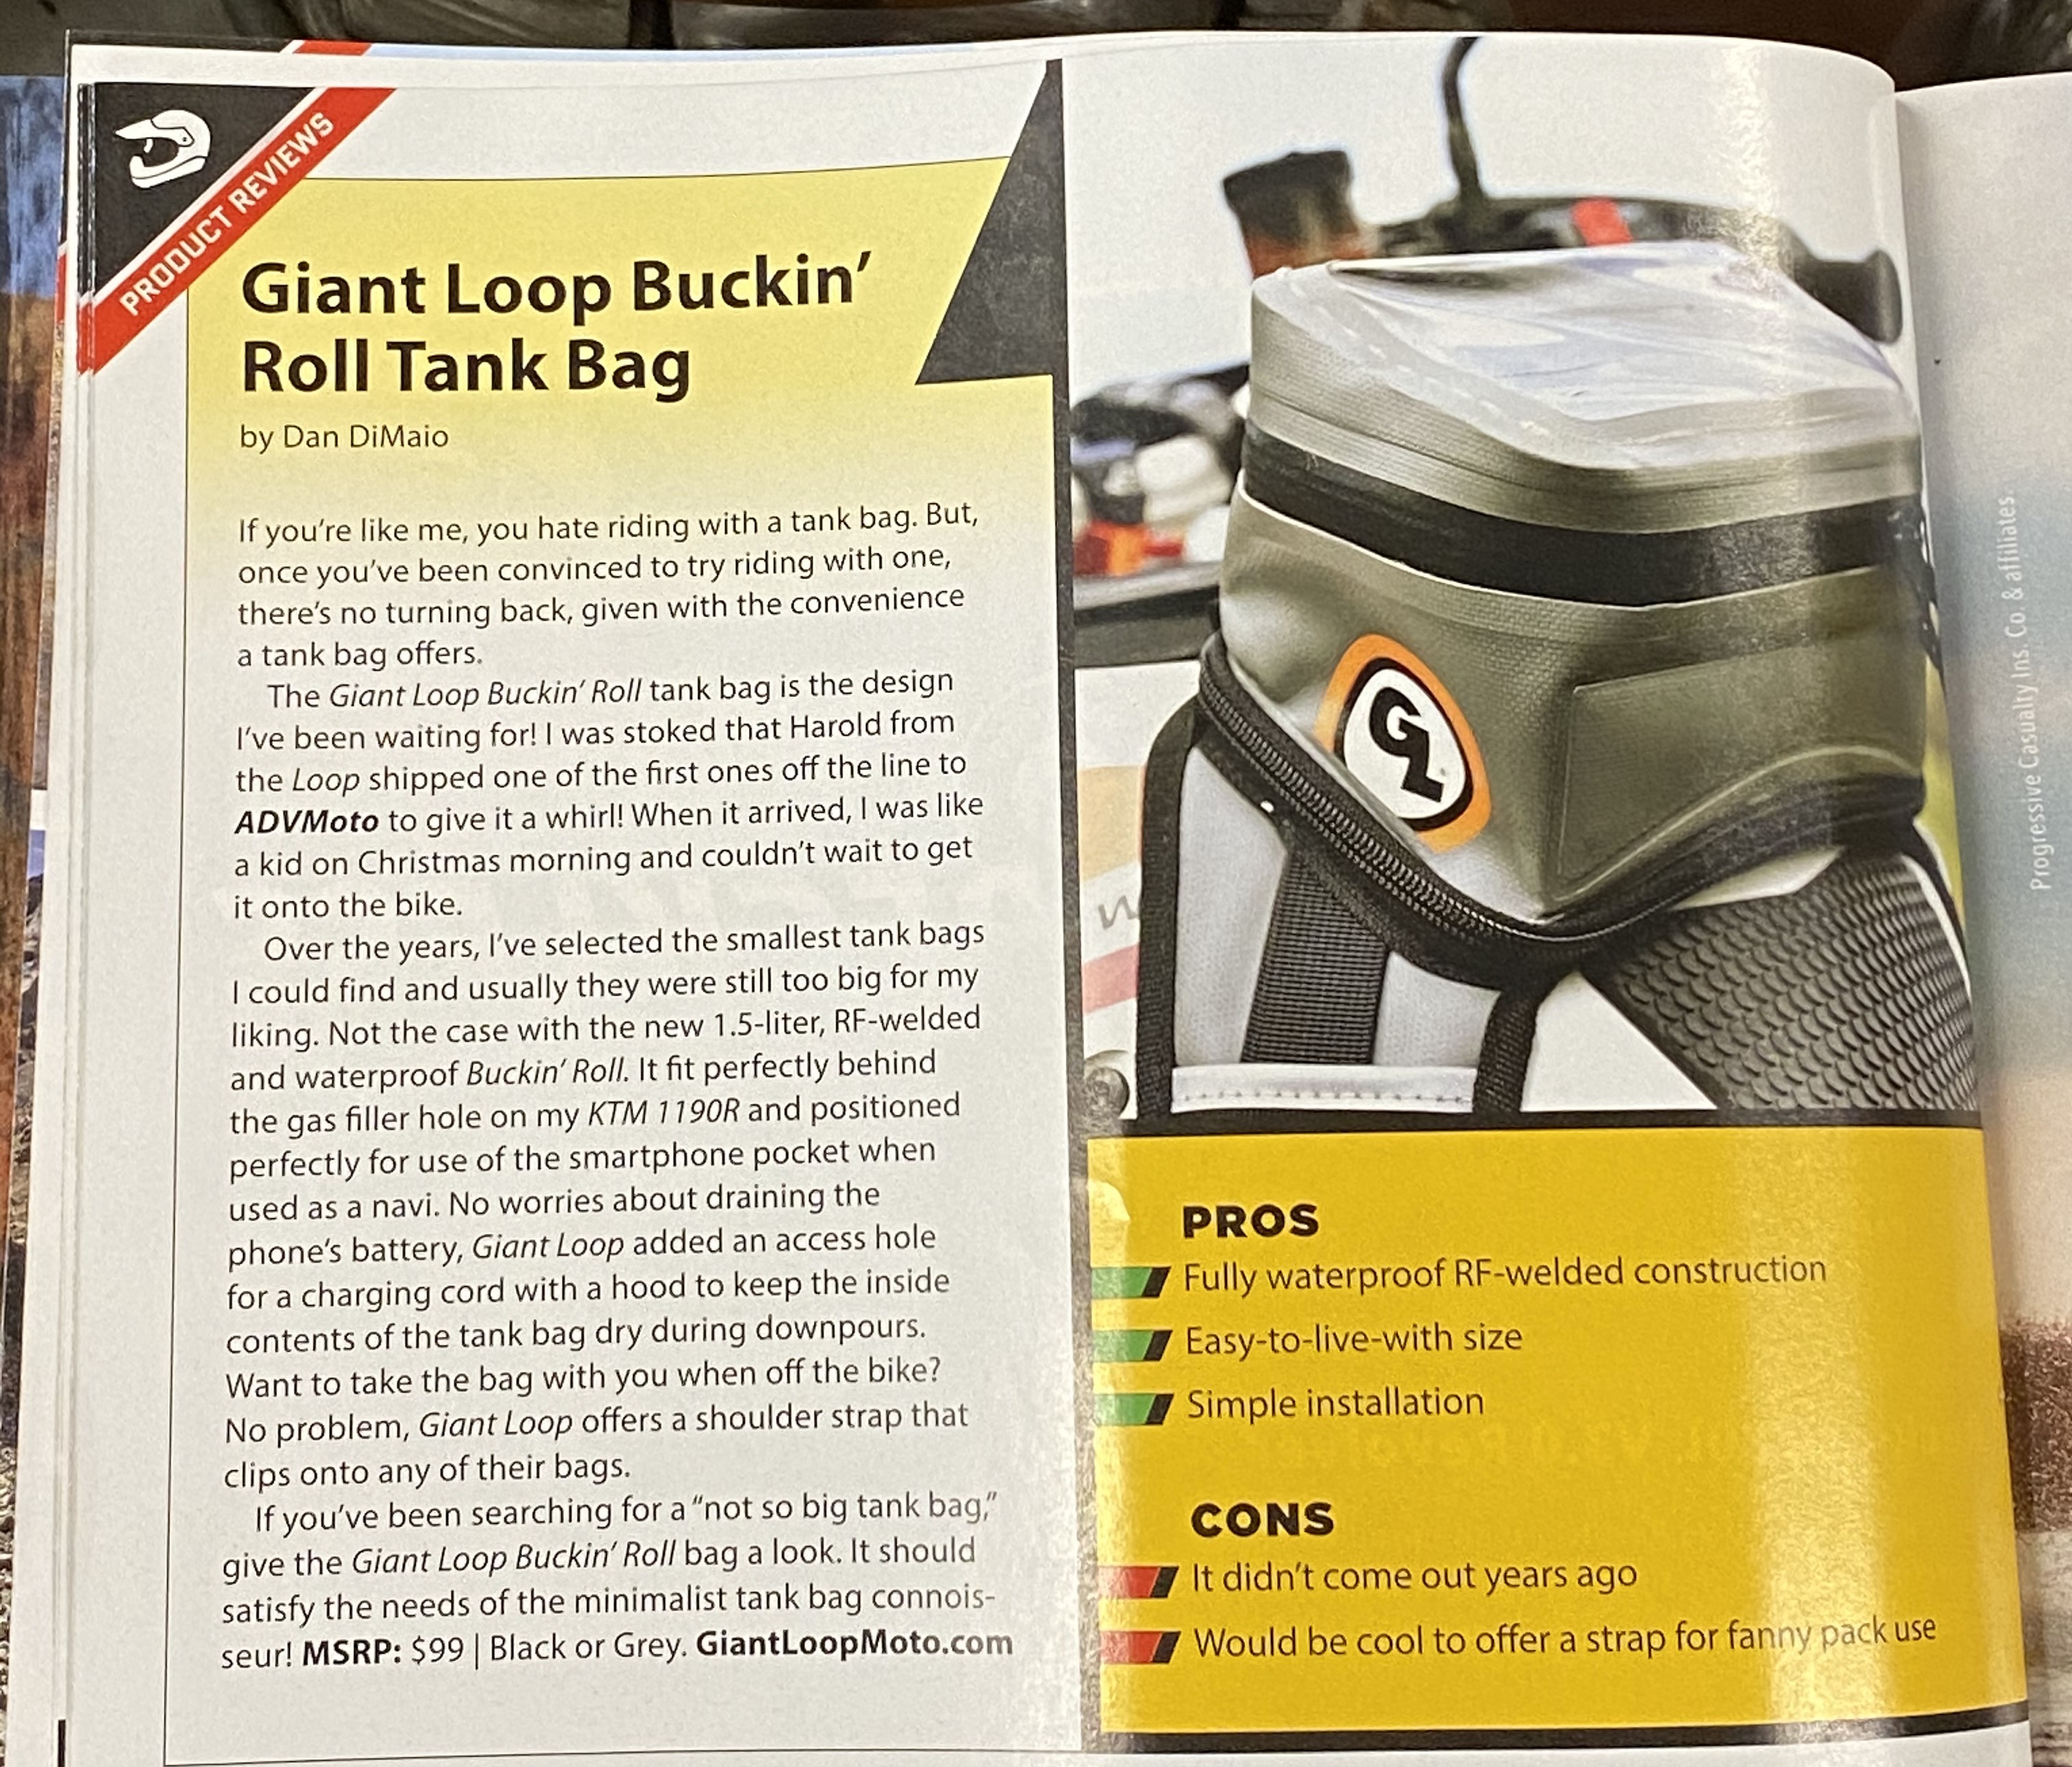 Buckin' Roll Tank Bag Reviewed in ADV Moto Magazine